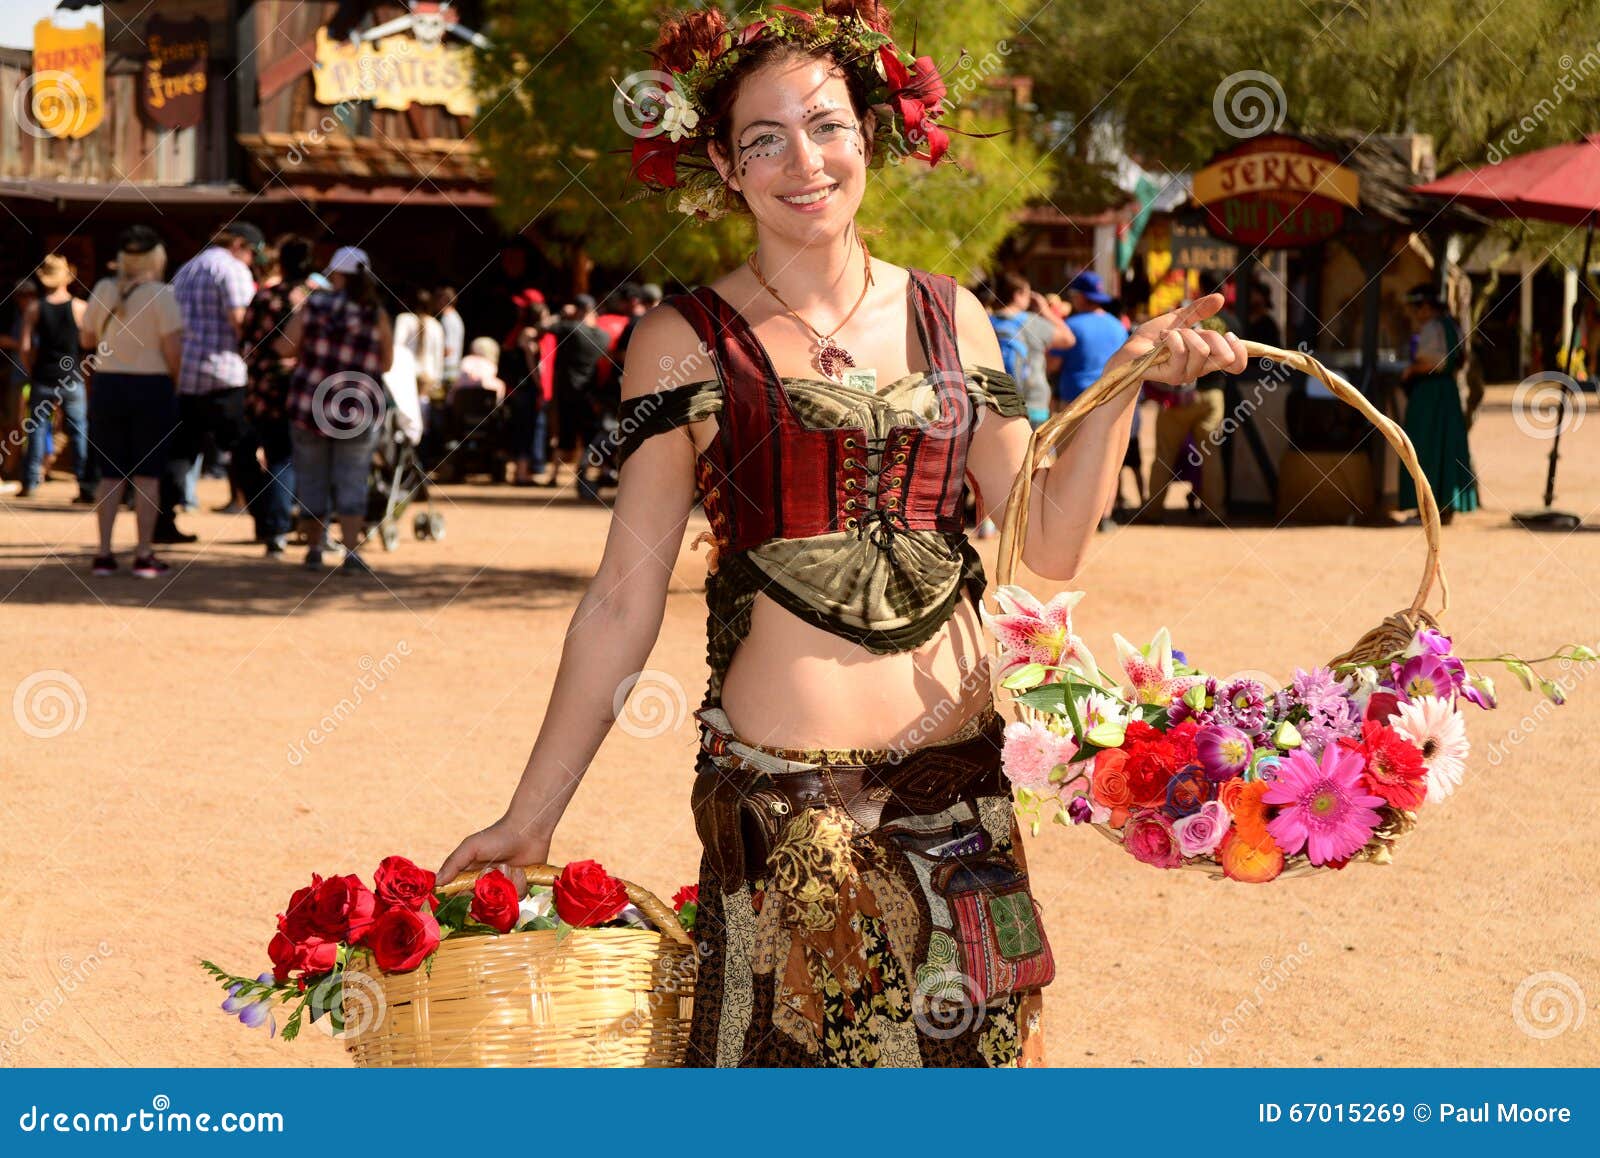 2016 Arizona Renaissance Festival Editorial Stock Image Image of show